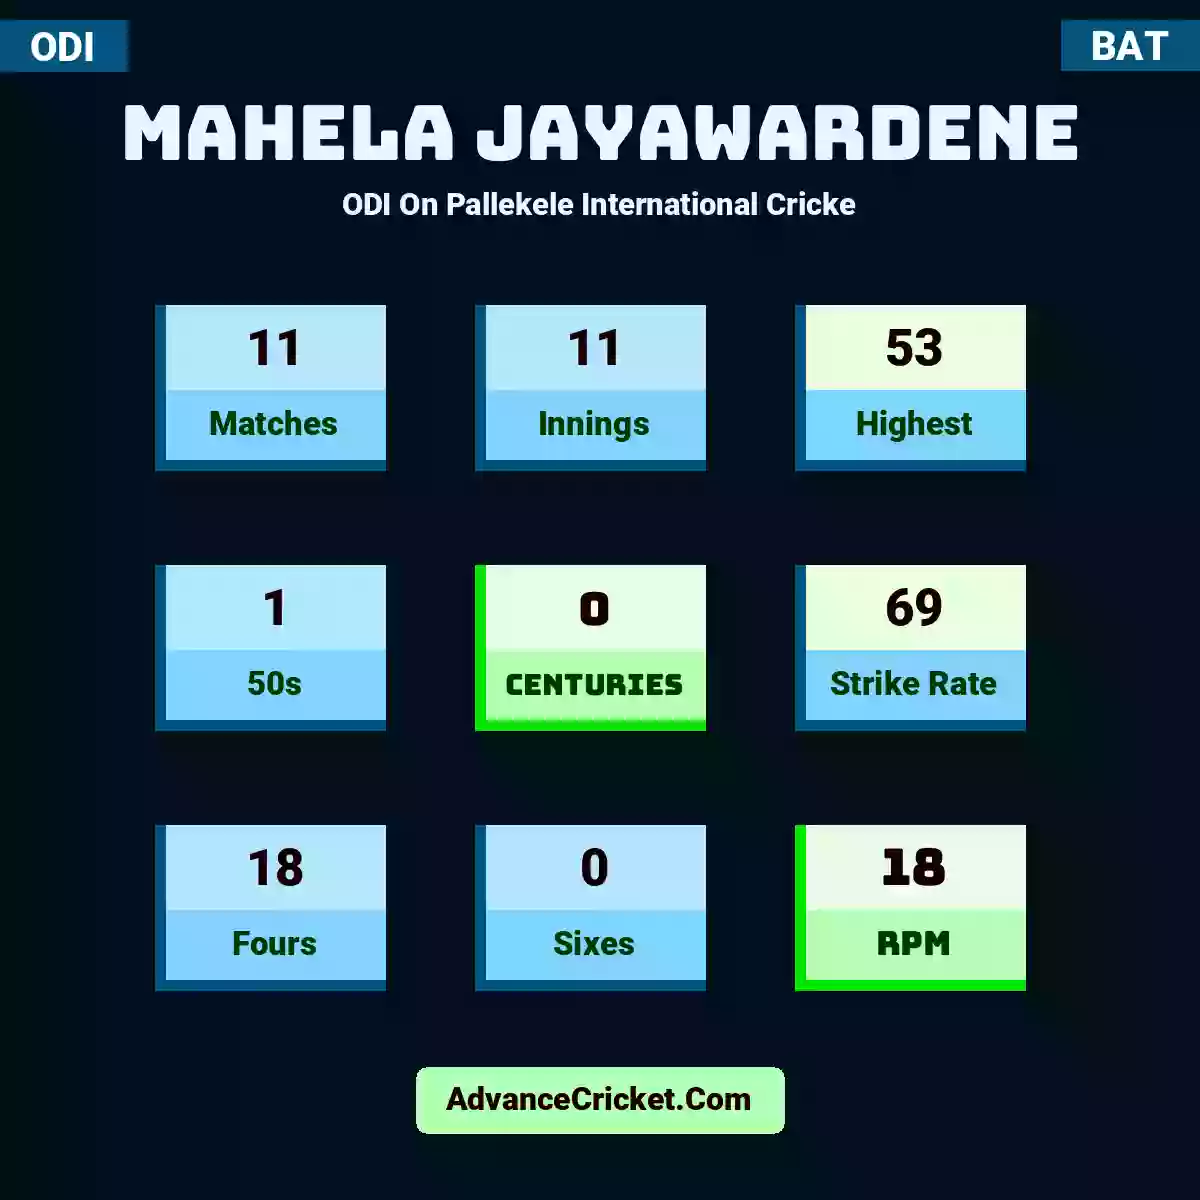 Mahela Jayawardene ODI  On Pallekele International Cricke, Mahela Jayawardene played 11 matches, scored 53 runs as highest, 1 half-centuries, and 0 centuries, with a strike rate of 69. M.Jayawardene hit 18 fours and 0 sixes, with an RPM of 18.